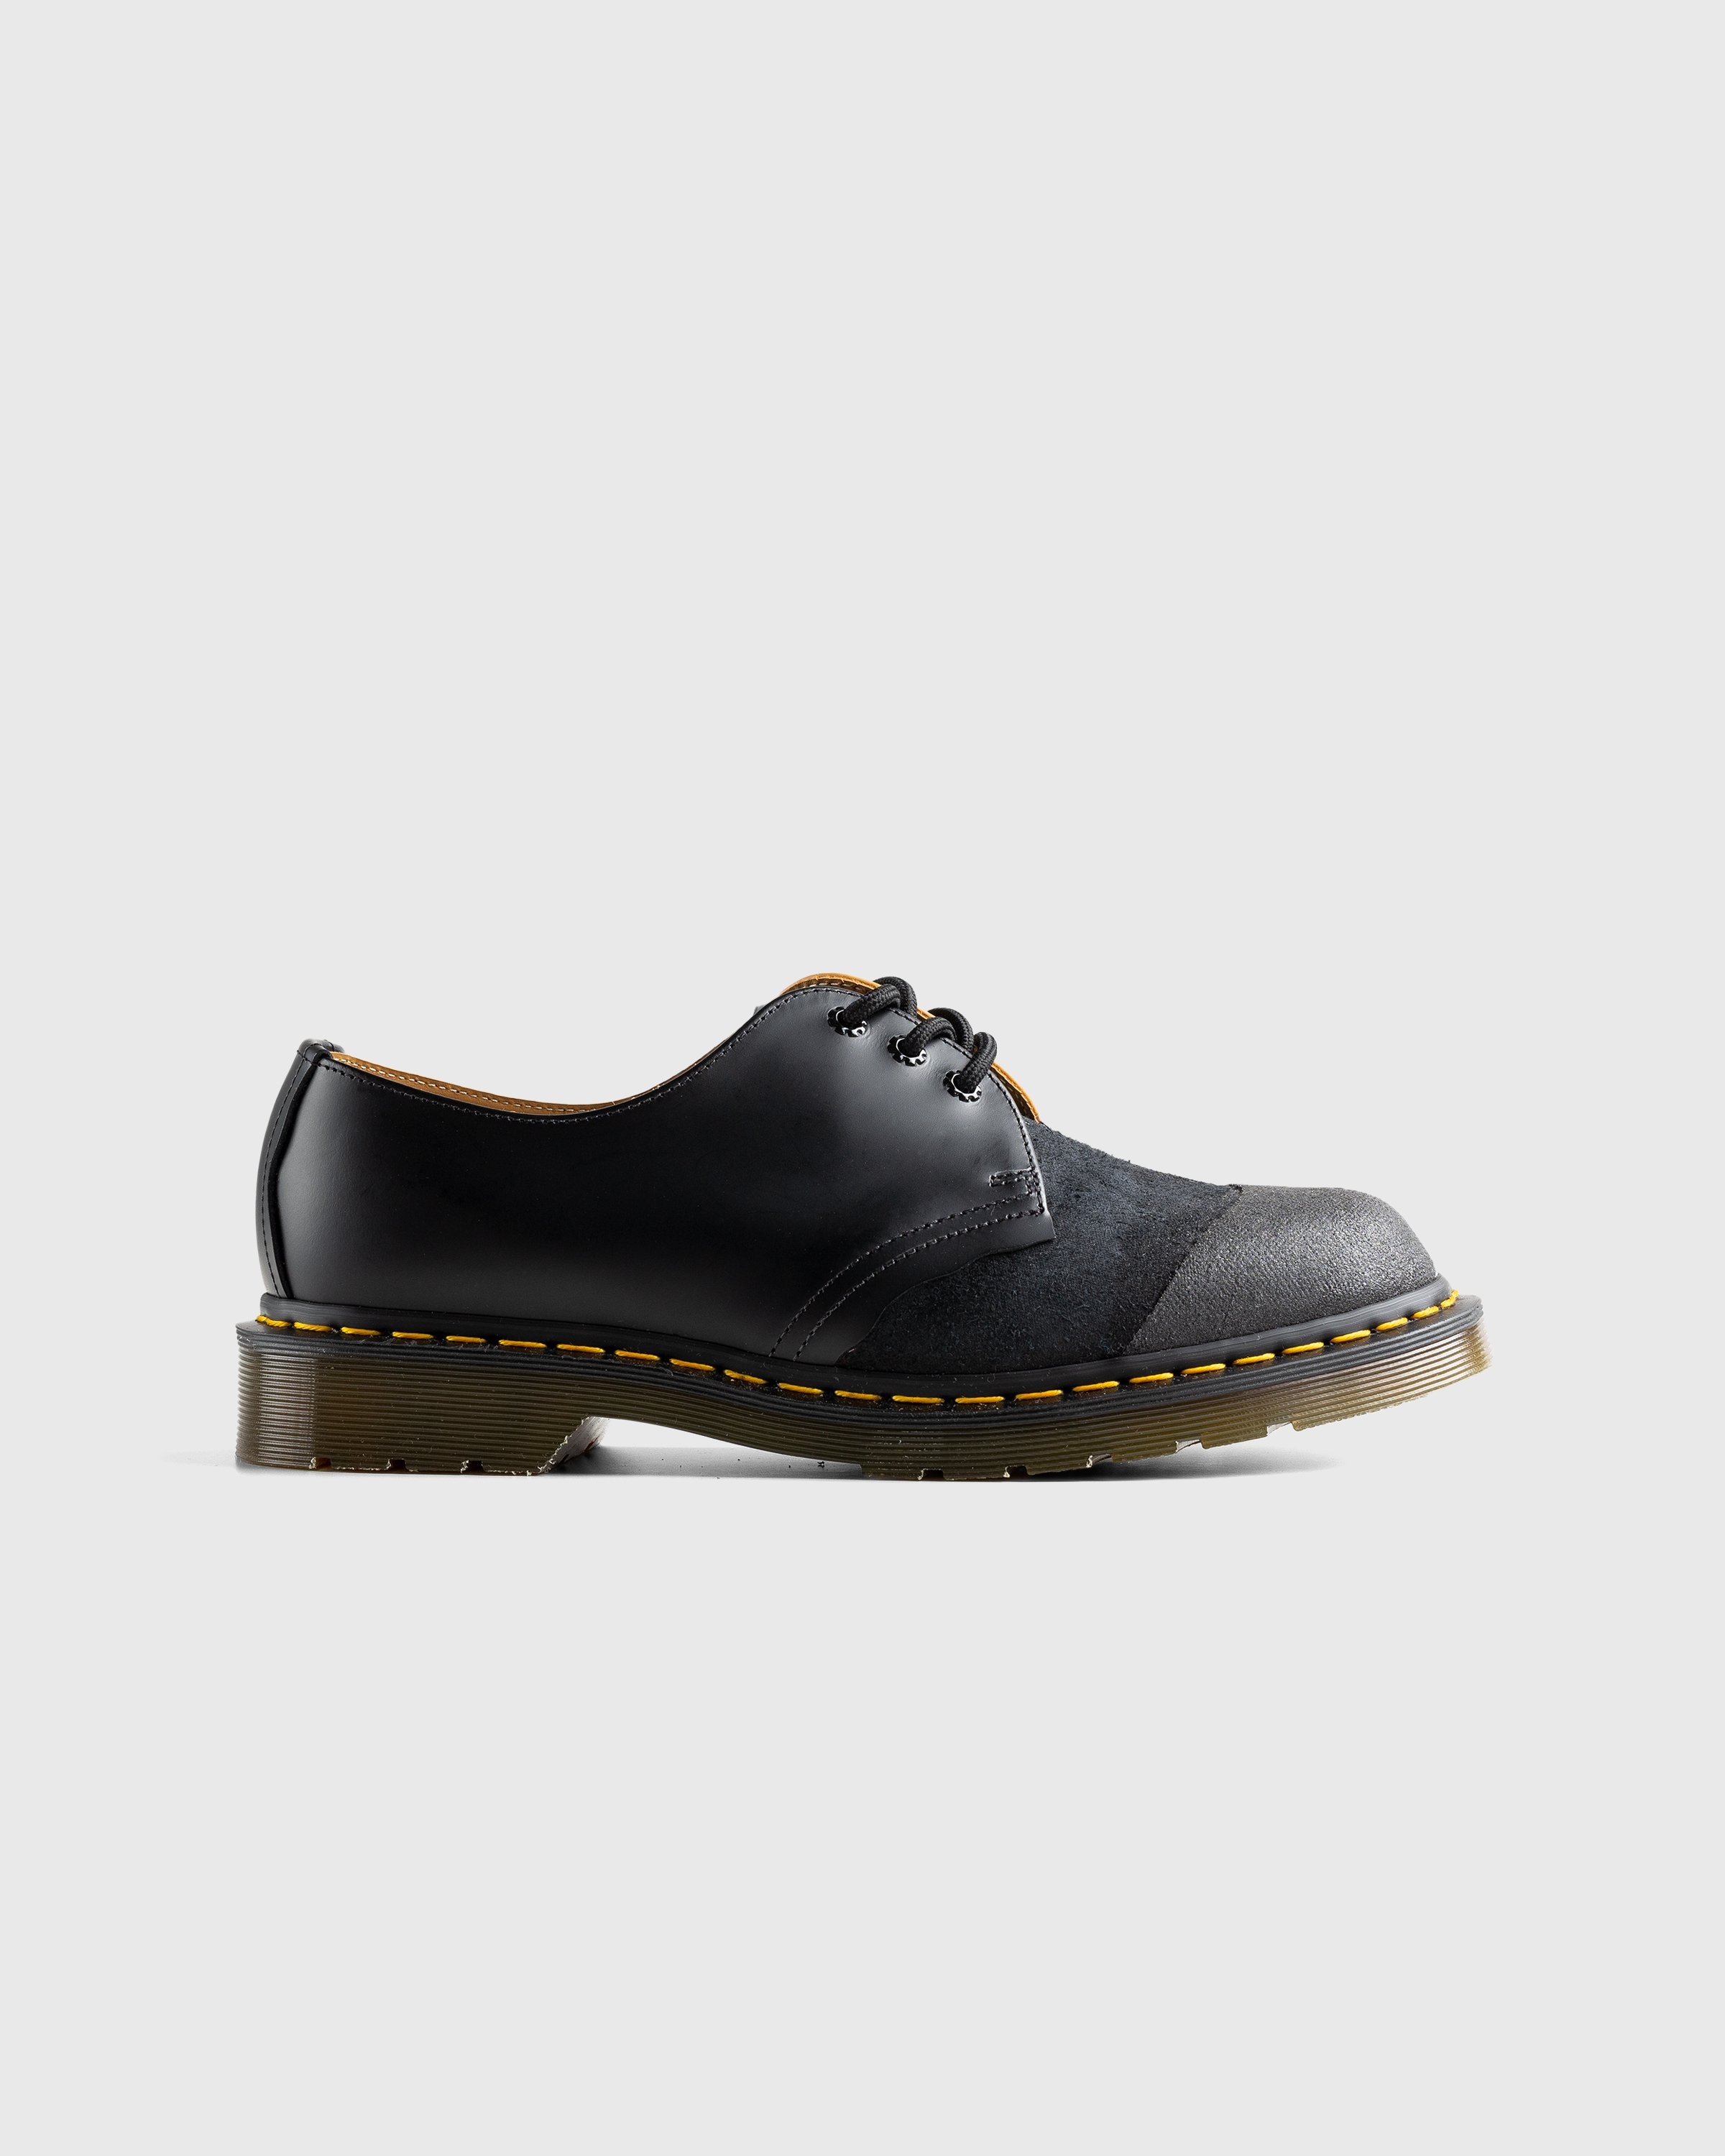 Dr. Martens – 1461 Reverse Black+Tan Smooth+Nappa - Shoes - Black - Image 1